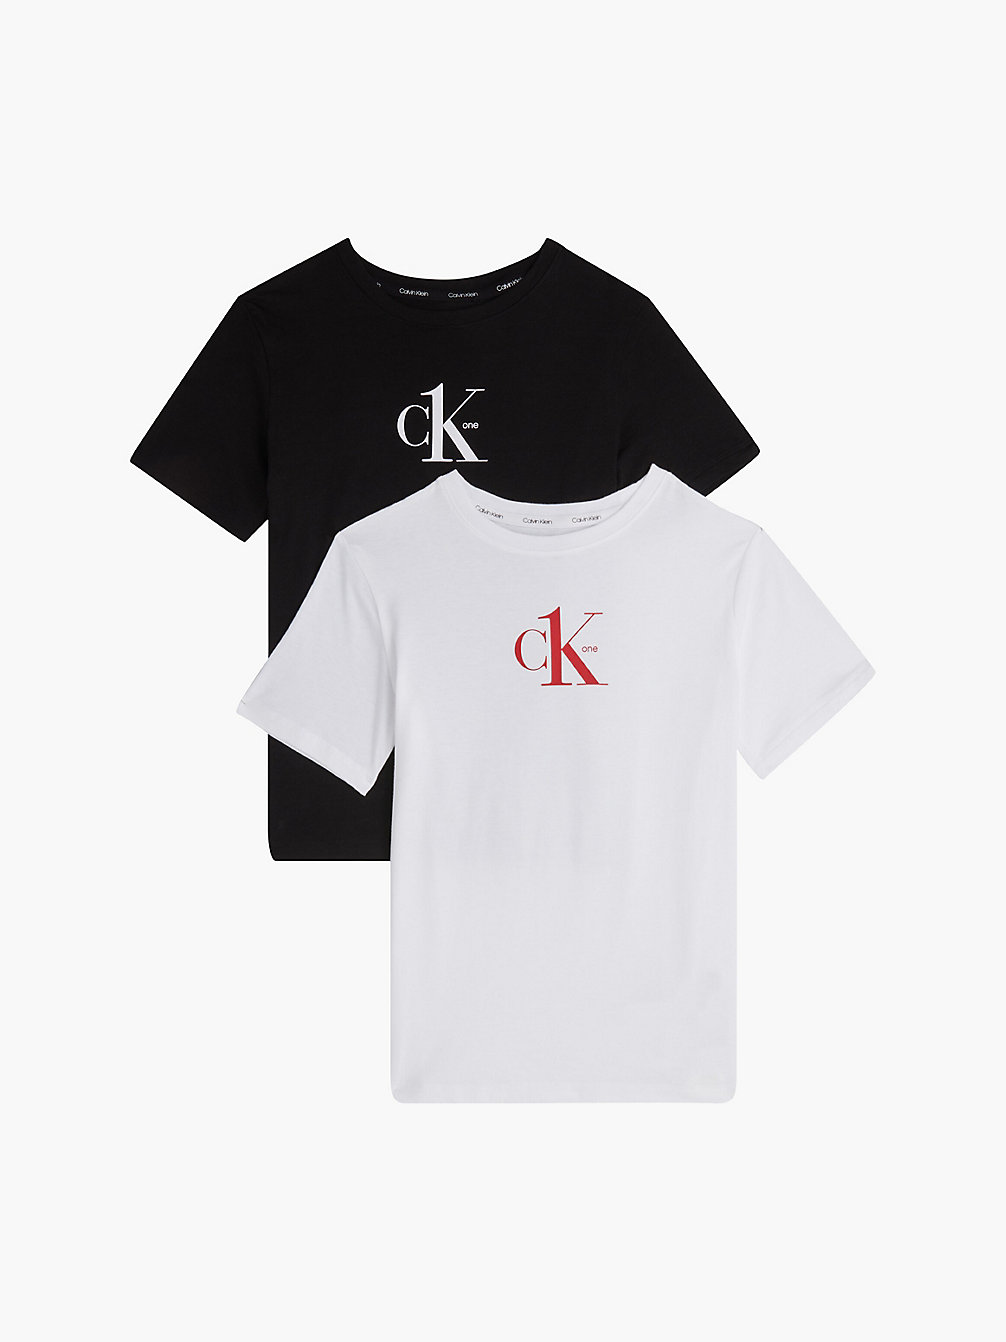 PVHBLACK/PVHWHITE > Комплект футболок унисекс 2 шт. - CK One > undefined kids unisex - Calvin Klein